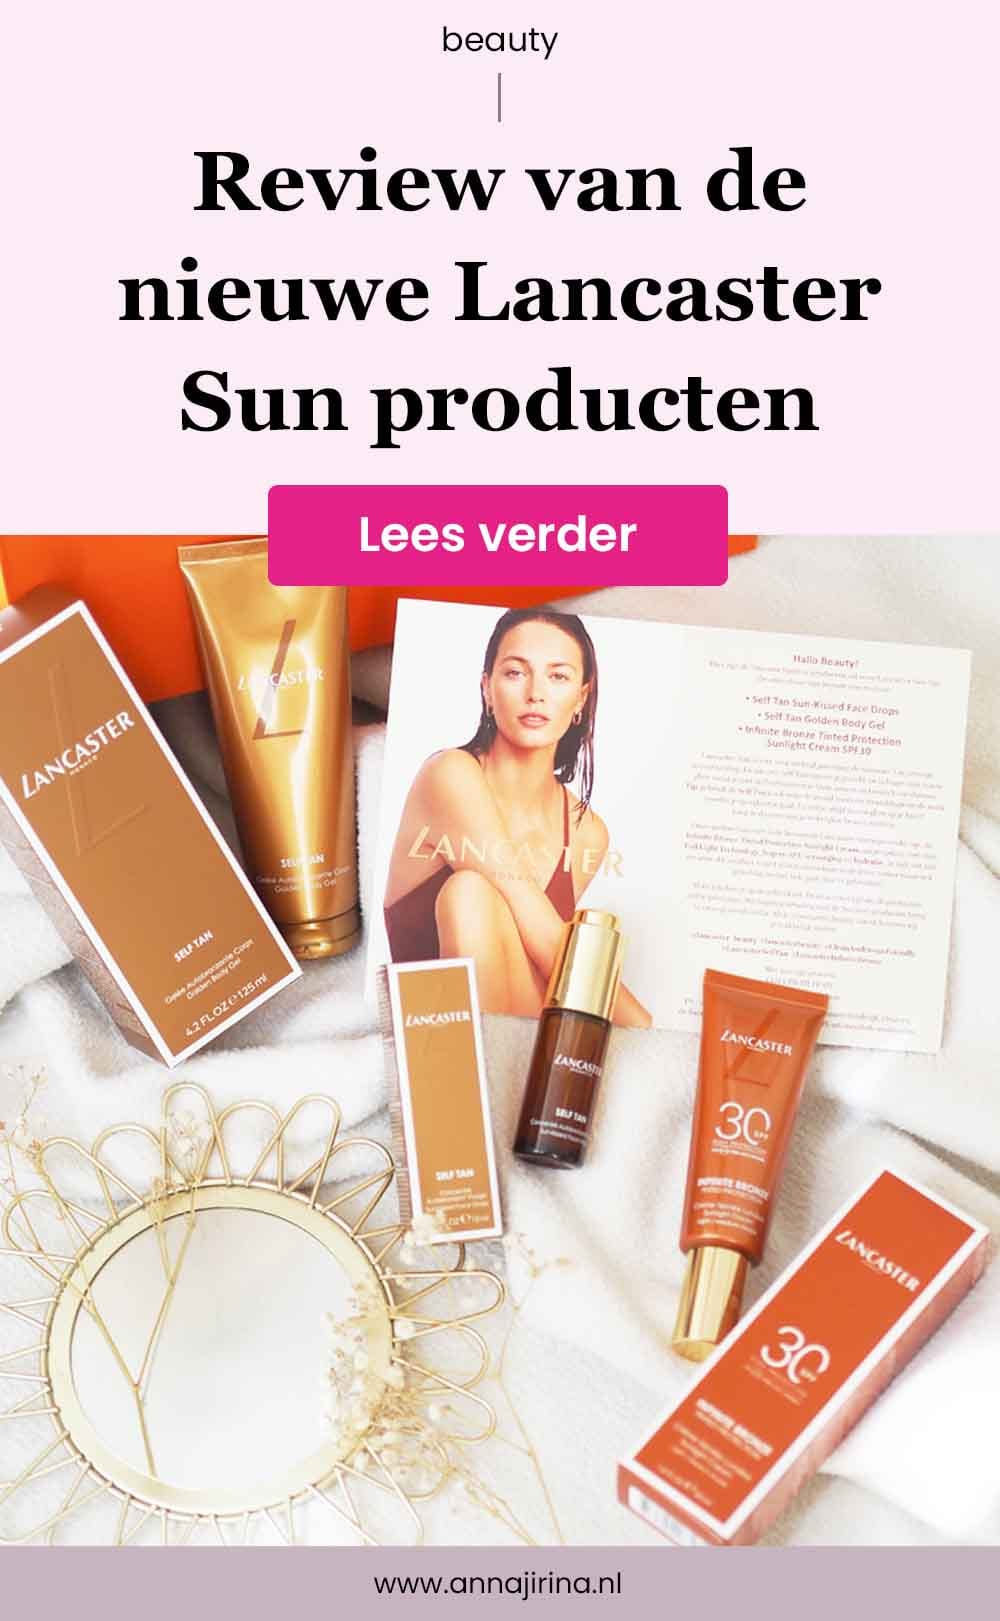 lancaster sun producten